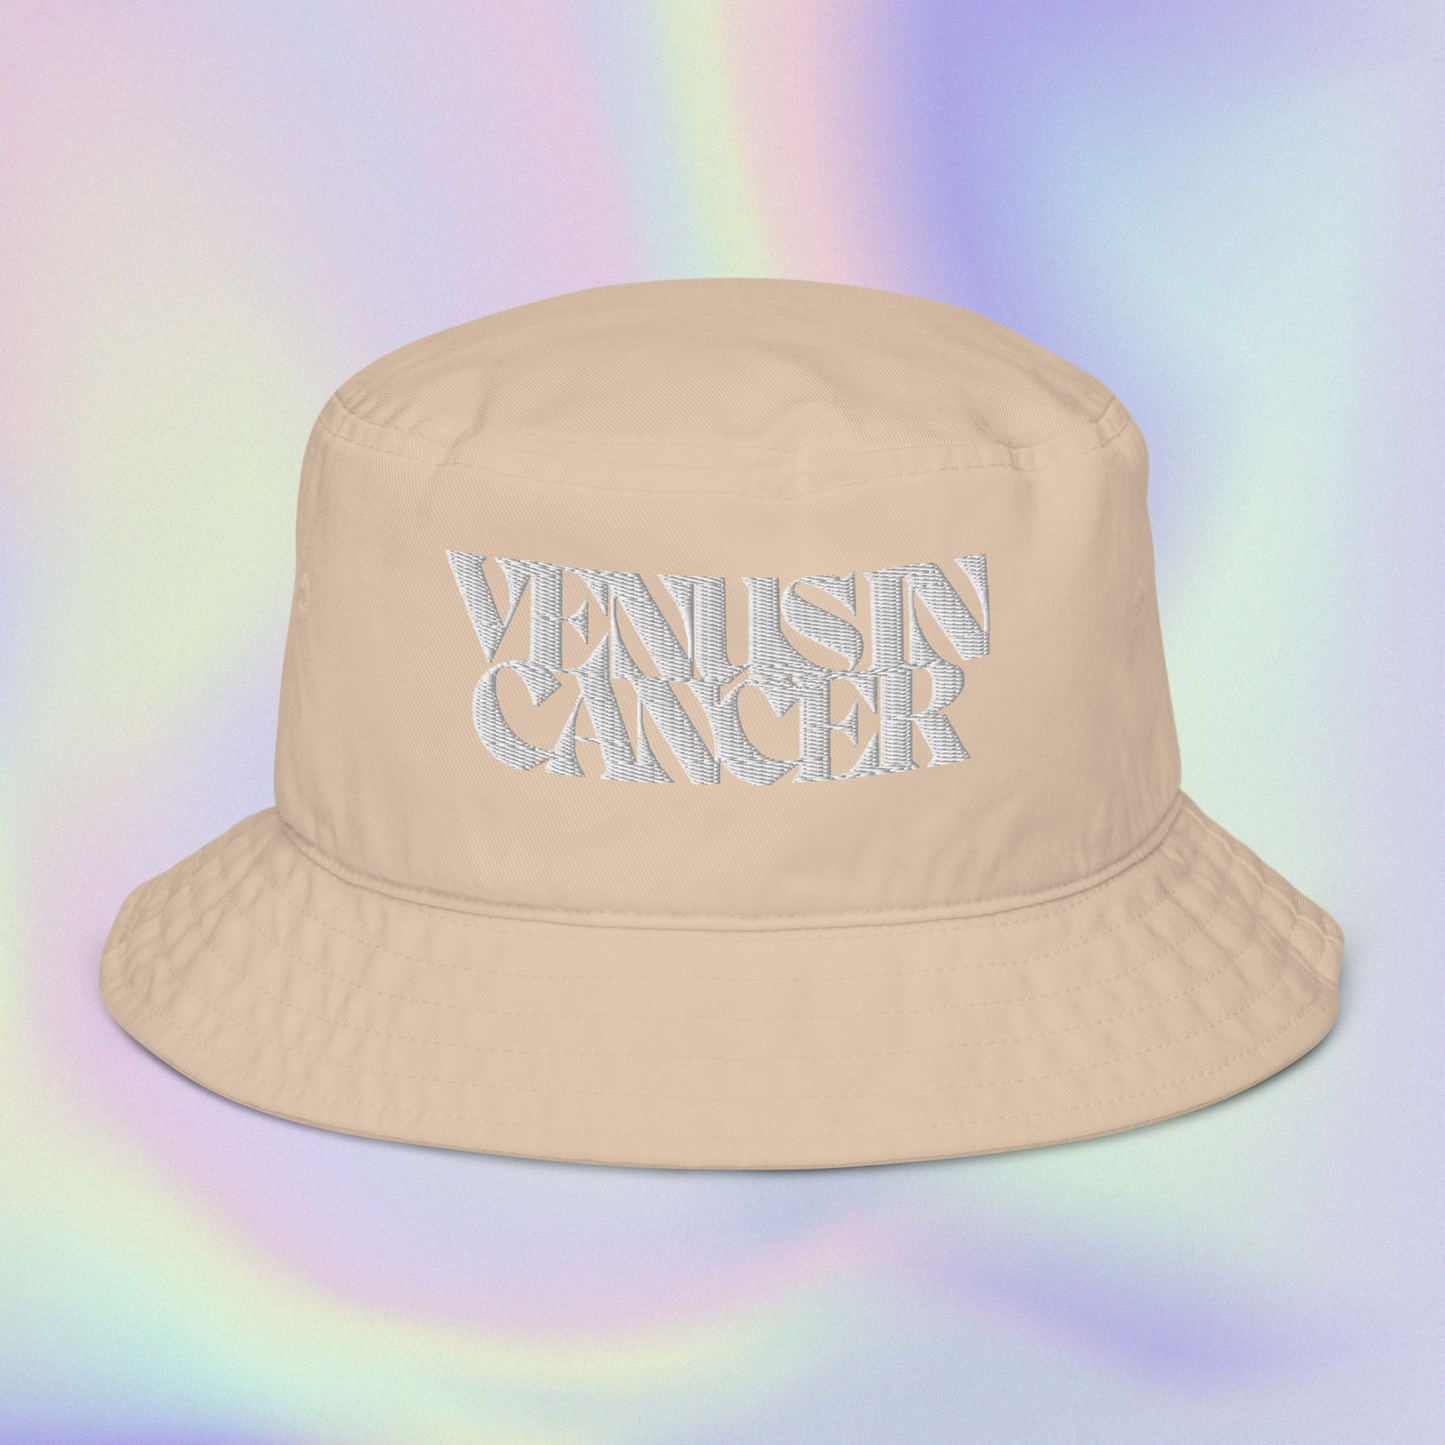 venus in cancer organic bucket hat